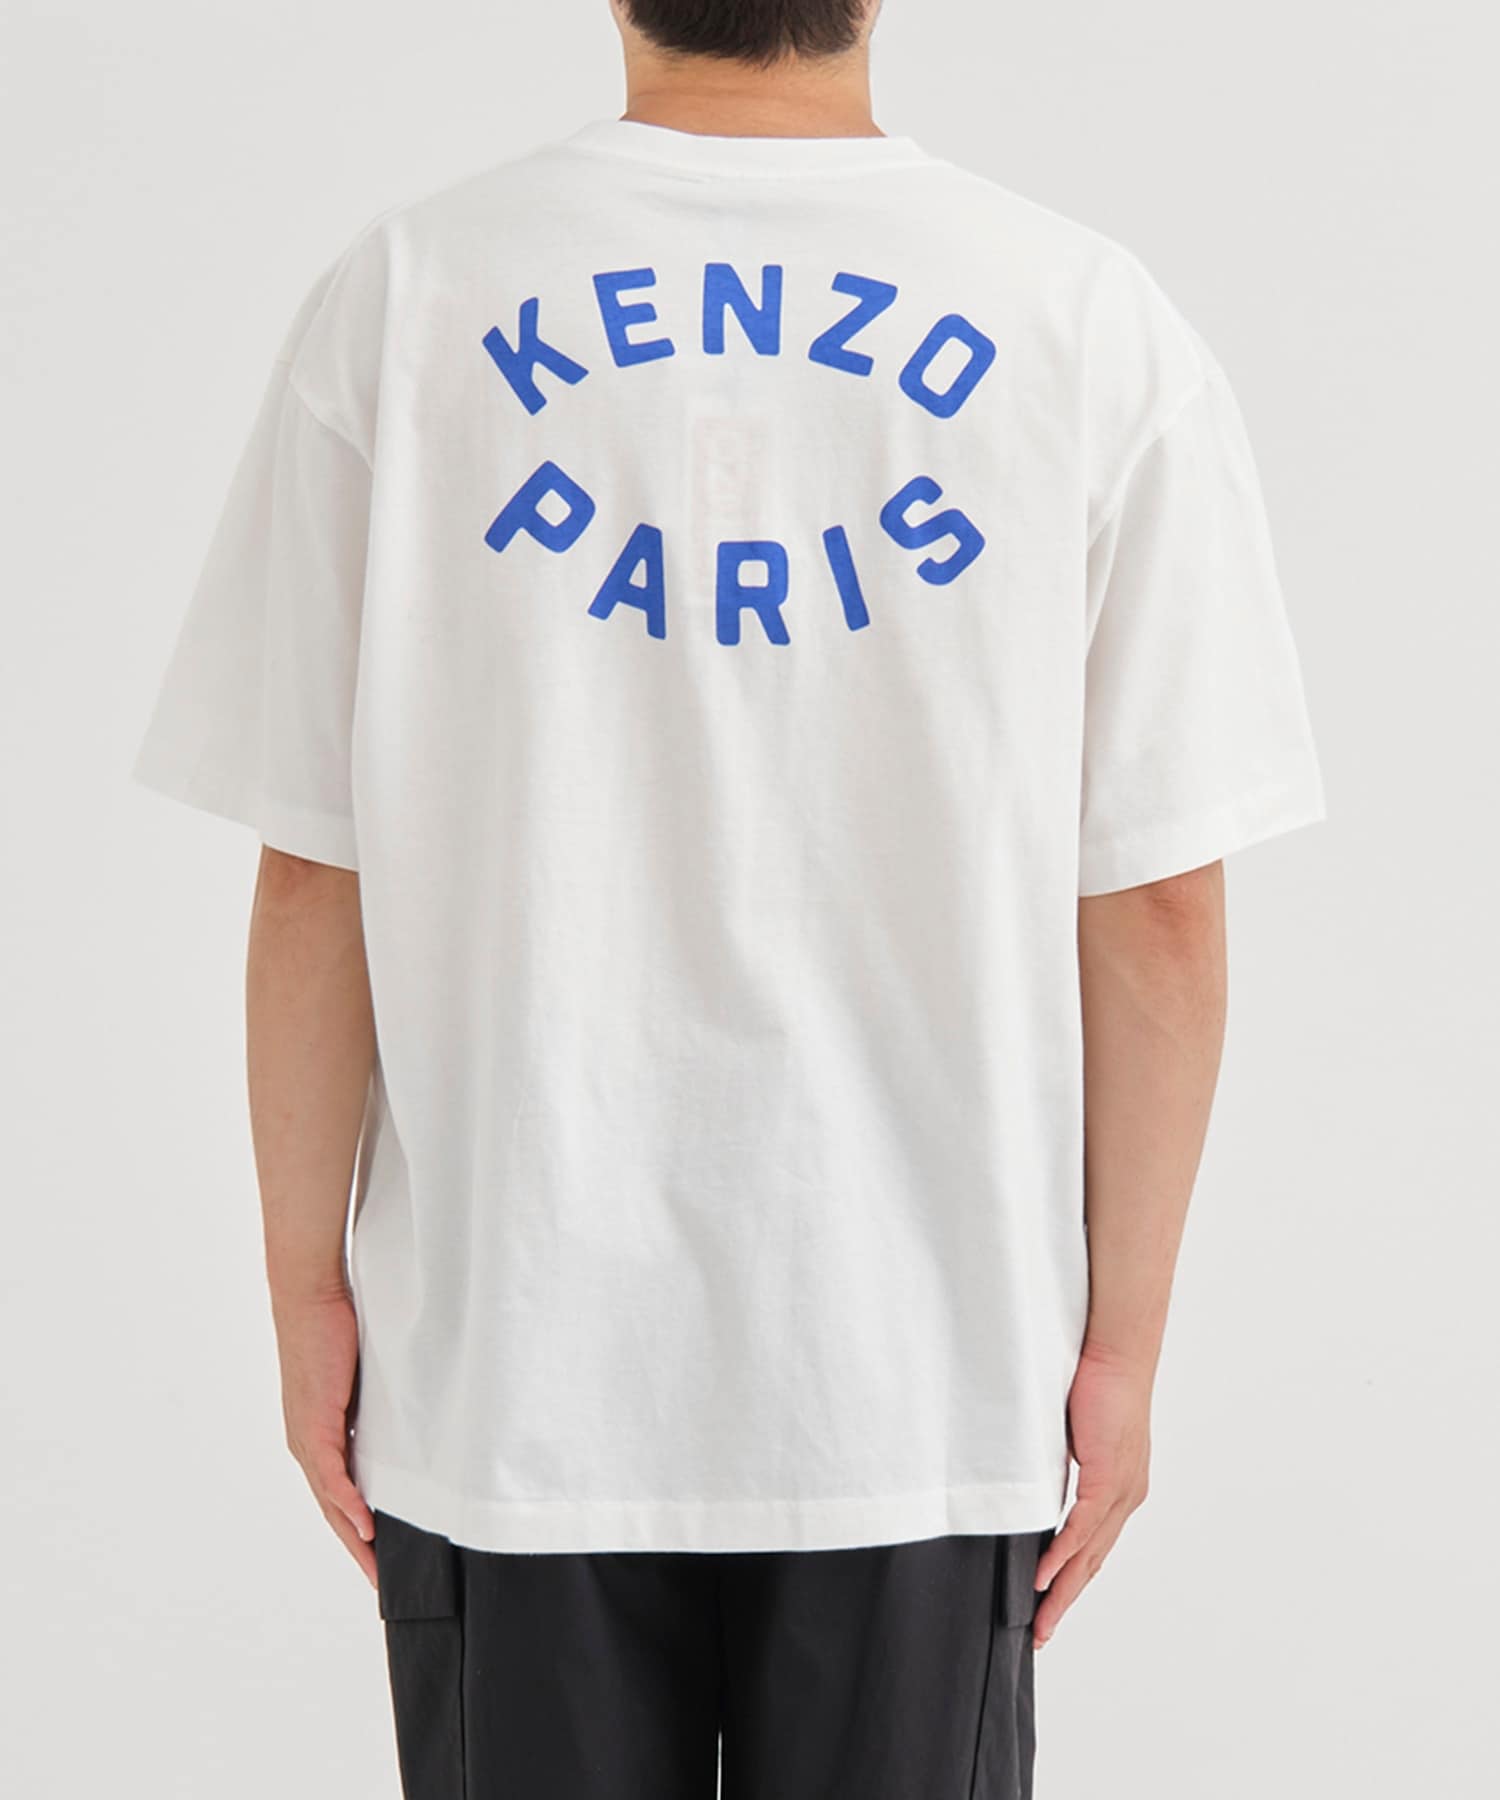 CLASSIC KENZO TARGET T-SHIRT KENZO